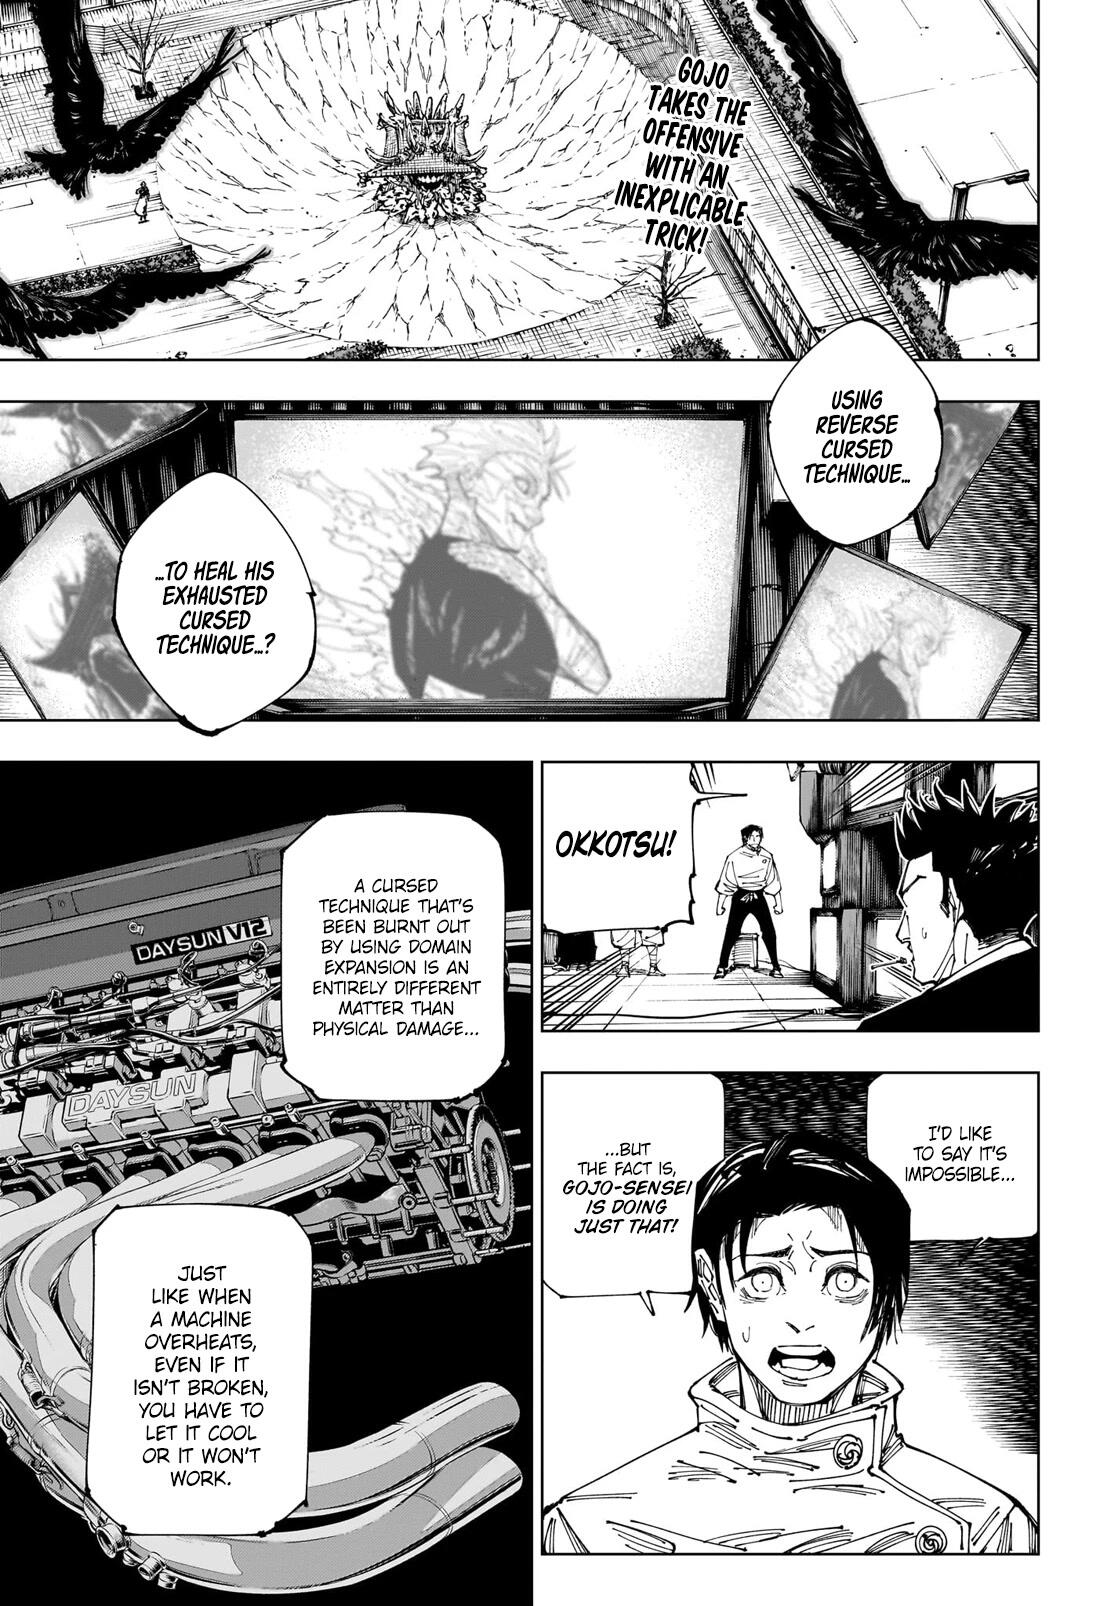 Jujutsu Kaisen Chapter 227: The Decisive Battle In The Uninhabited, Demon-Infested Shinjuku ⑤ page 4 - Mangakakalot